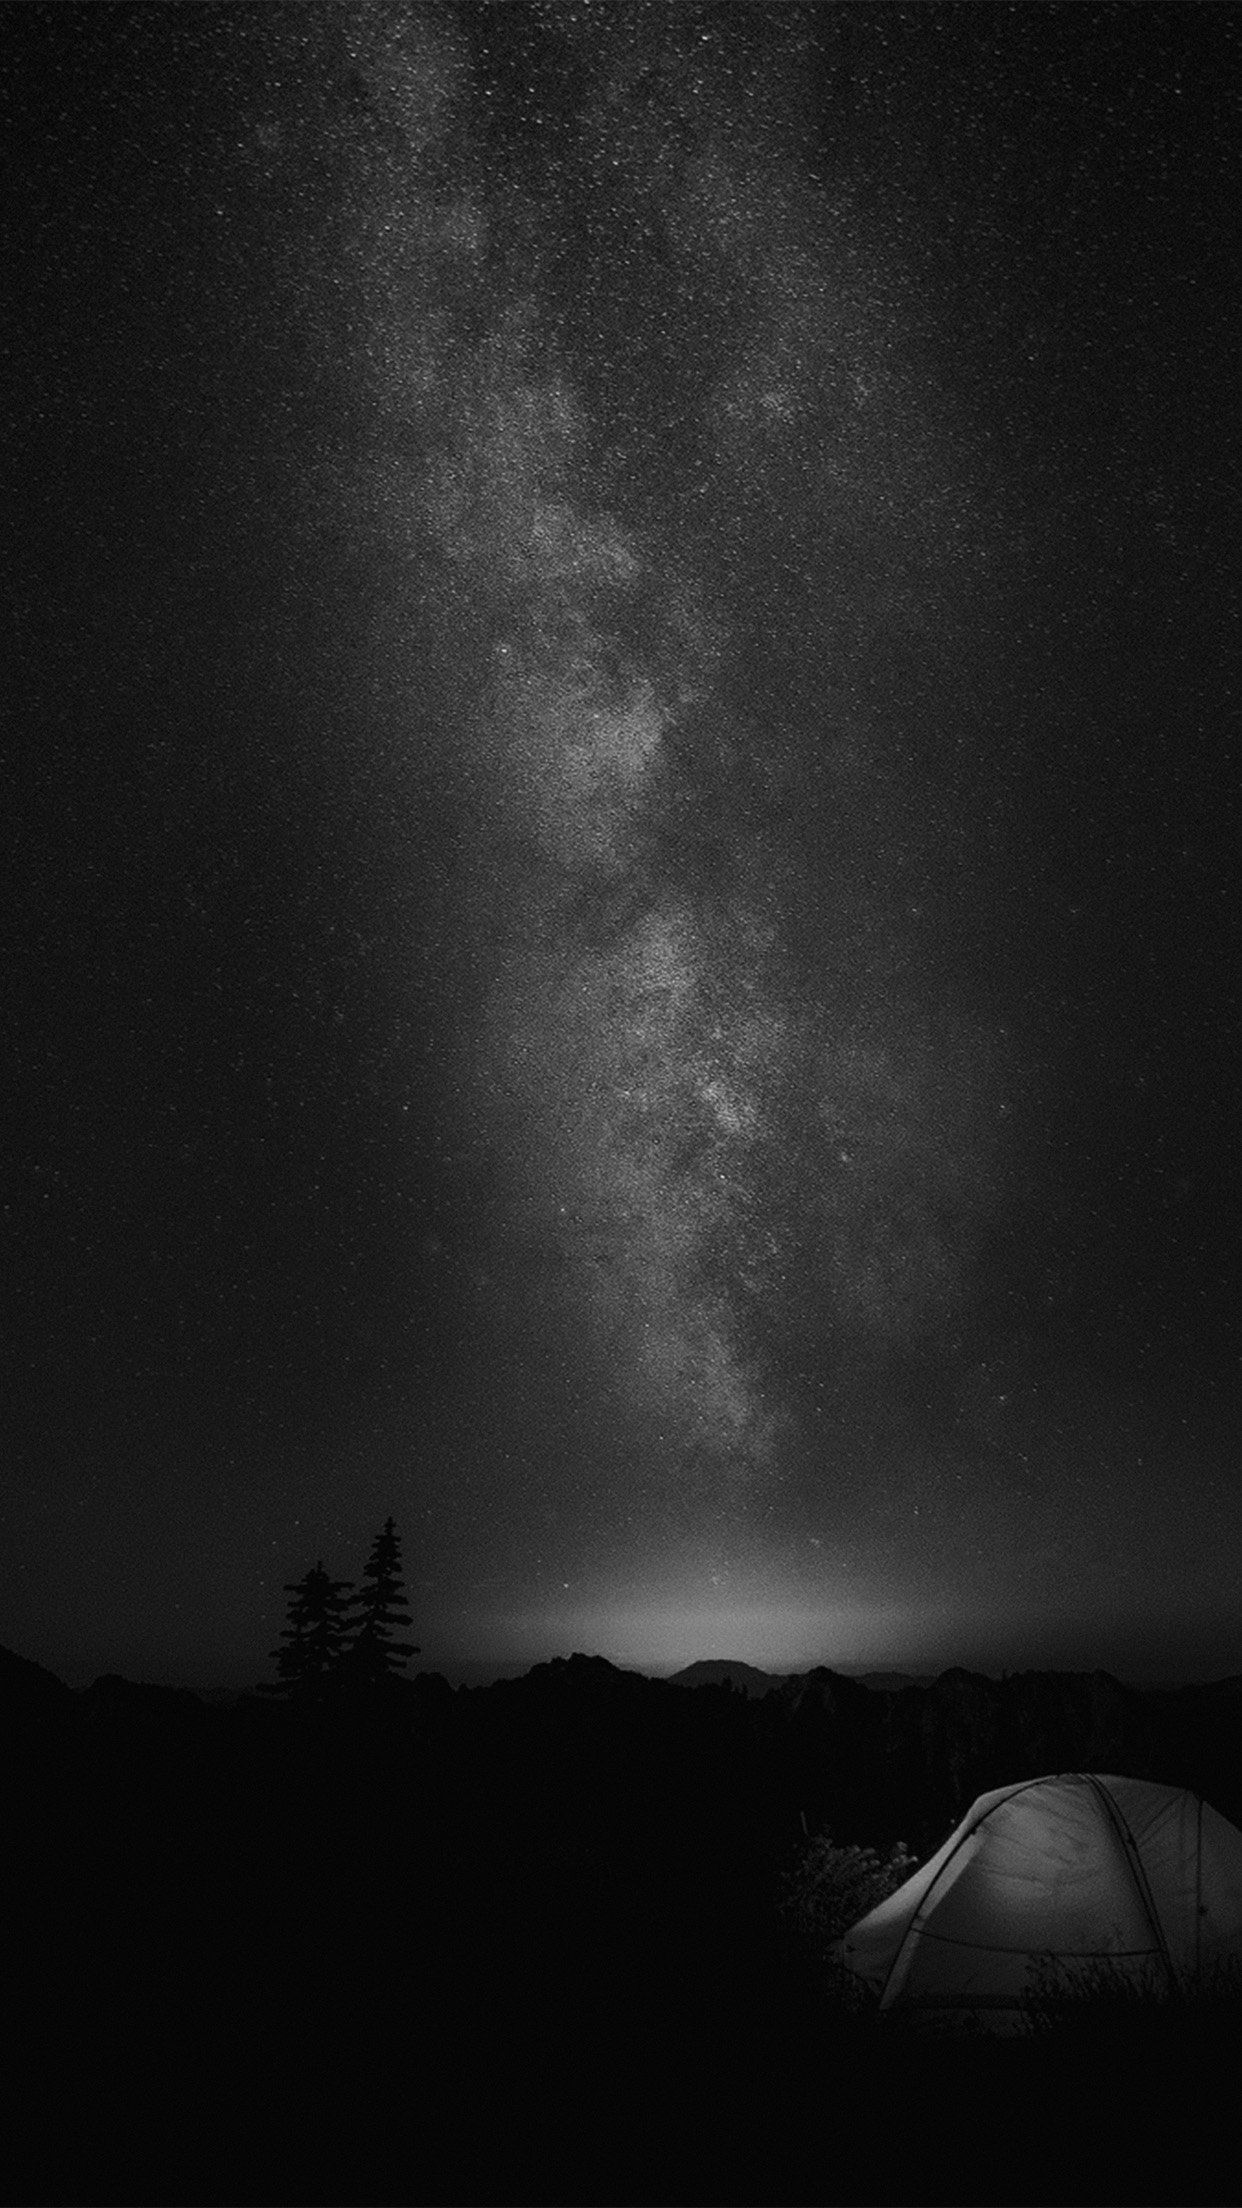 Camping Night Star Galaxy Milky Sky Dark Space Bw Dark Wallpaper 4k Black